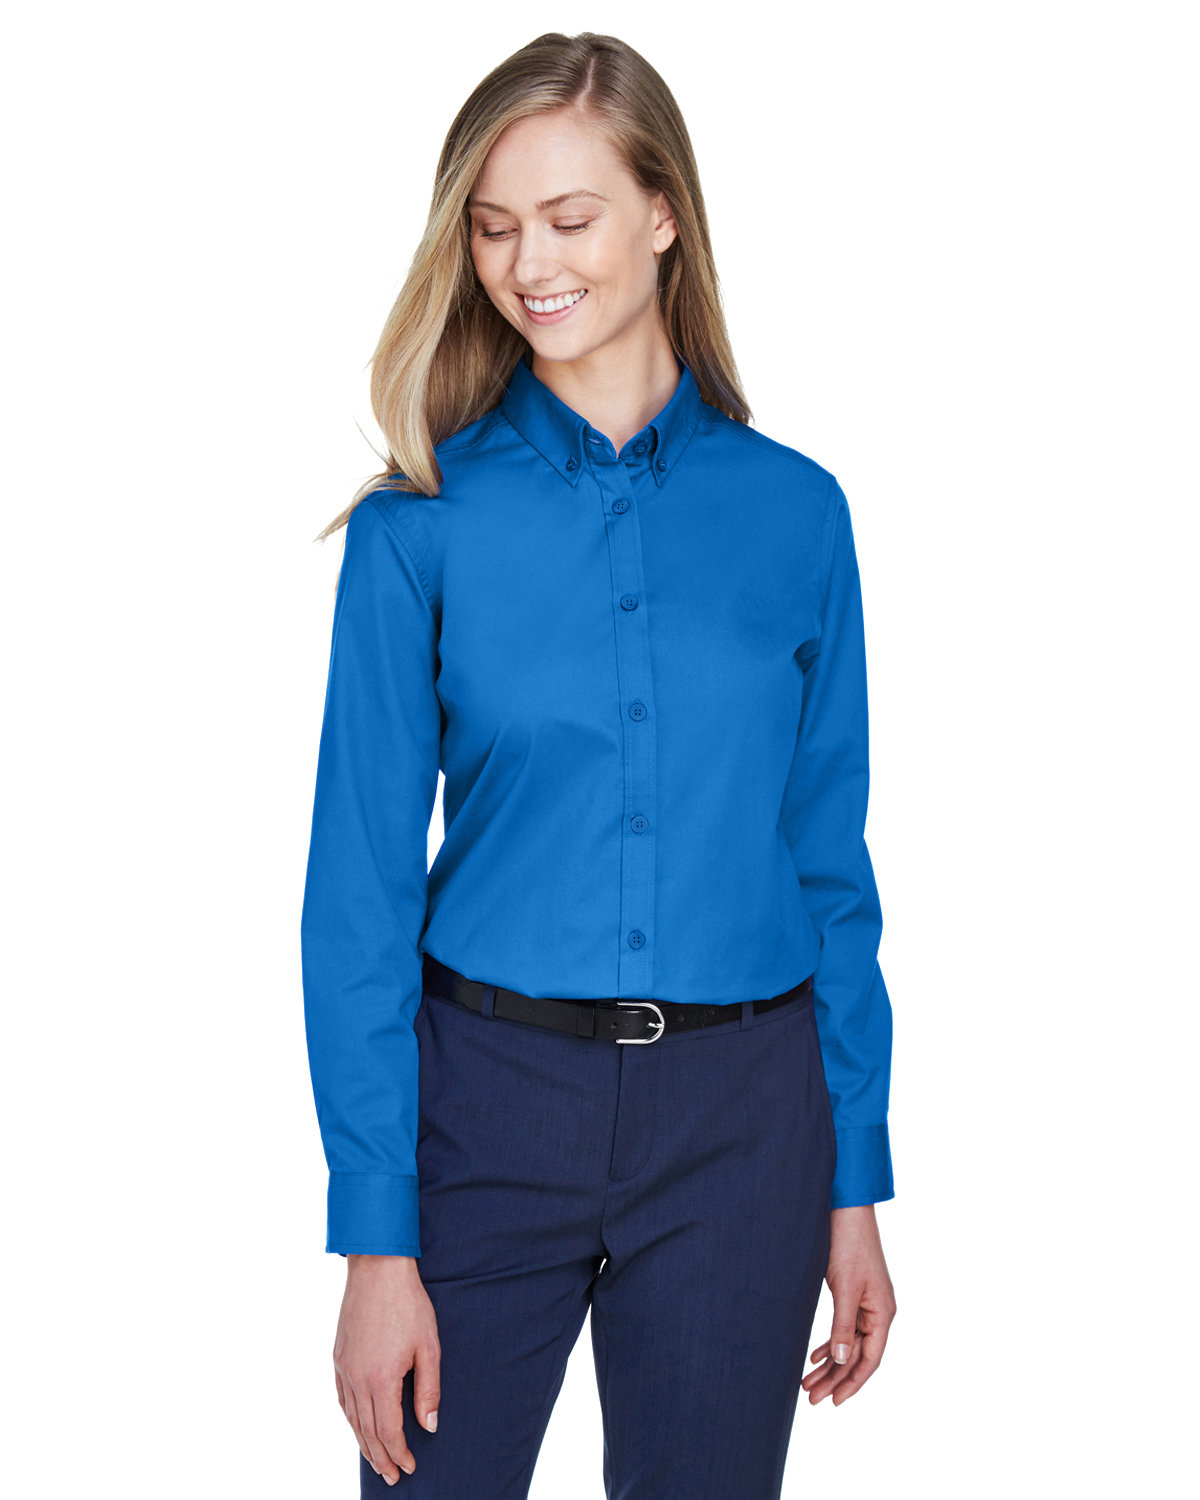 CORE365 Ladies' Operate Long-Sleeve Twill Shirt TRUE ROYAL 